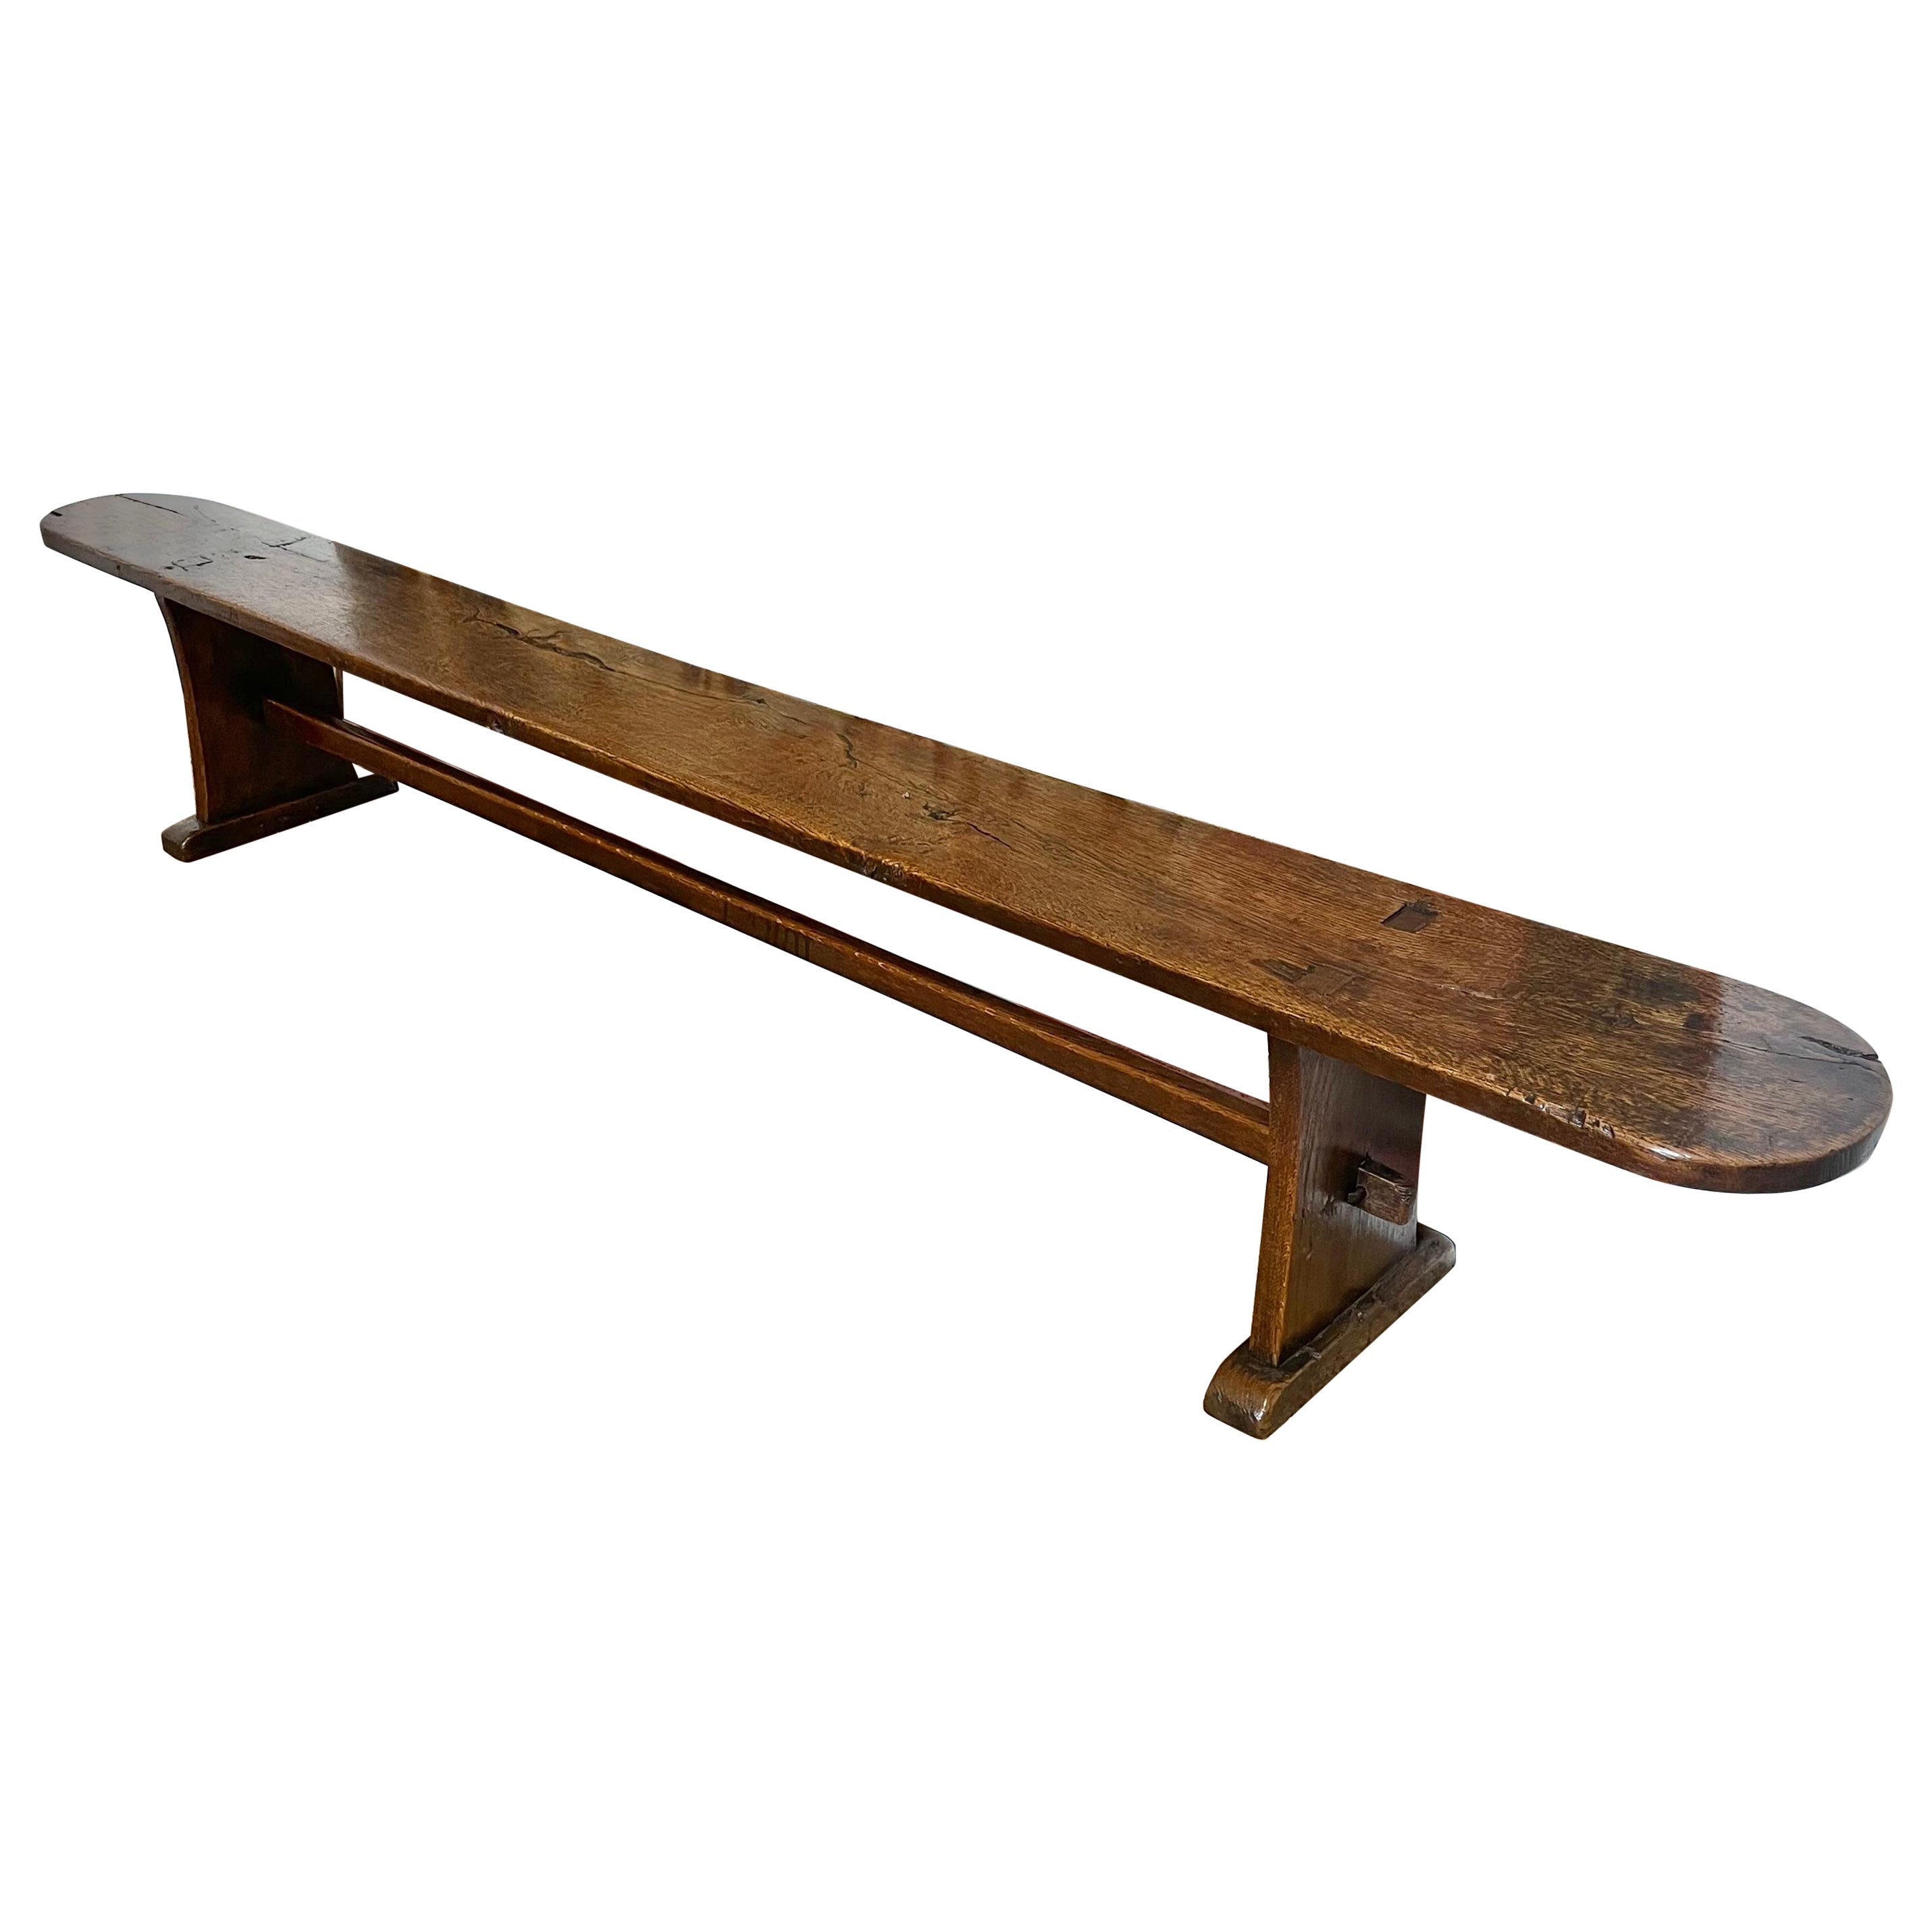 Long 19th century oak bench 3m 